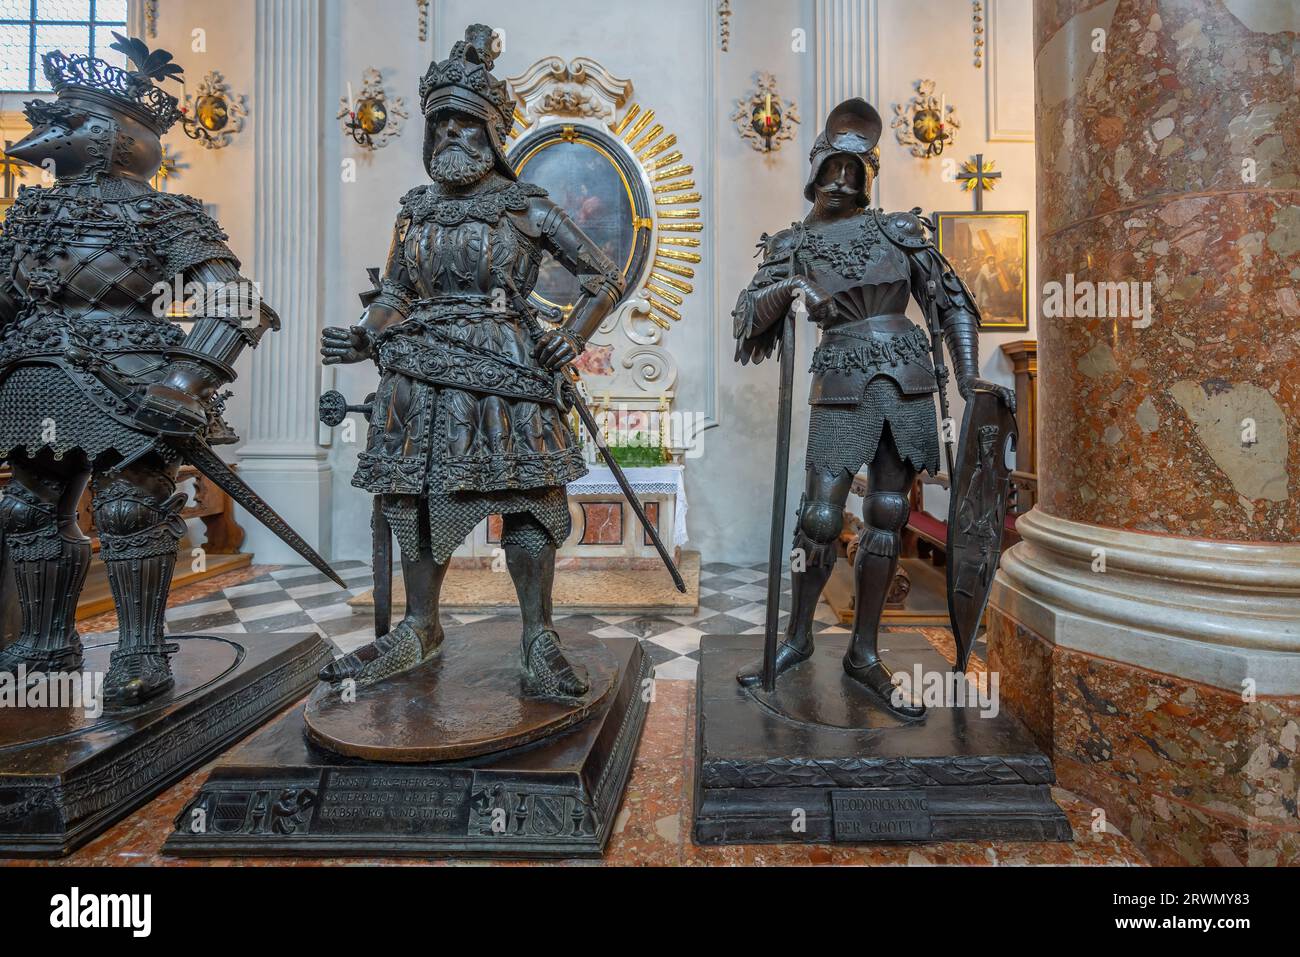 Statues of Duke Ernest and King Theoderic the Great at Hofkirche (Court Church) - Innsbruck, Austria Stock Photo